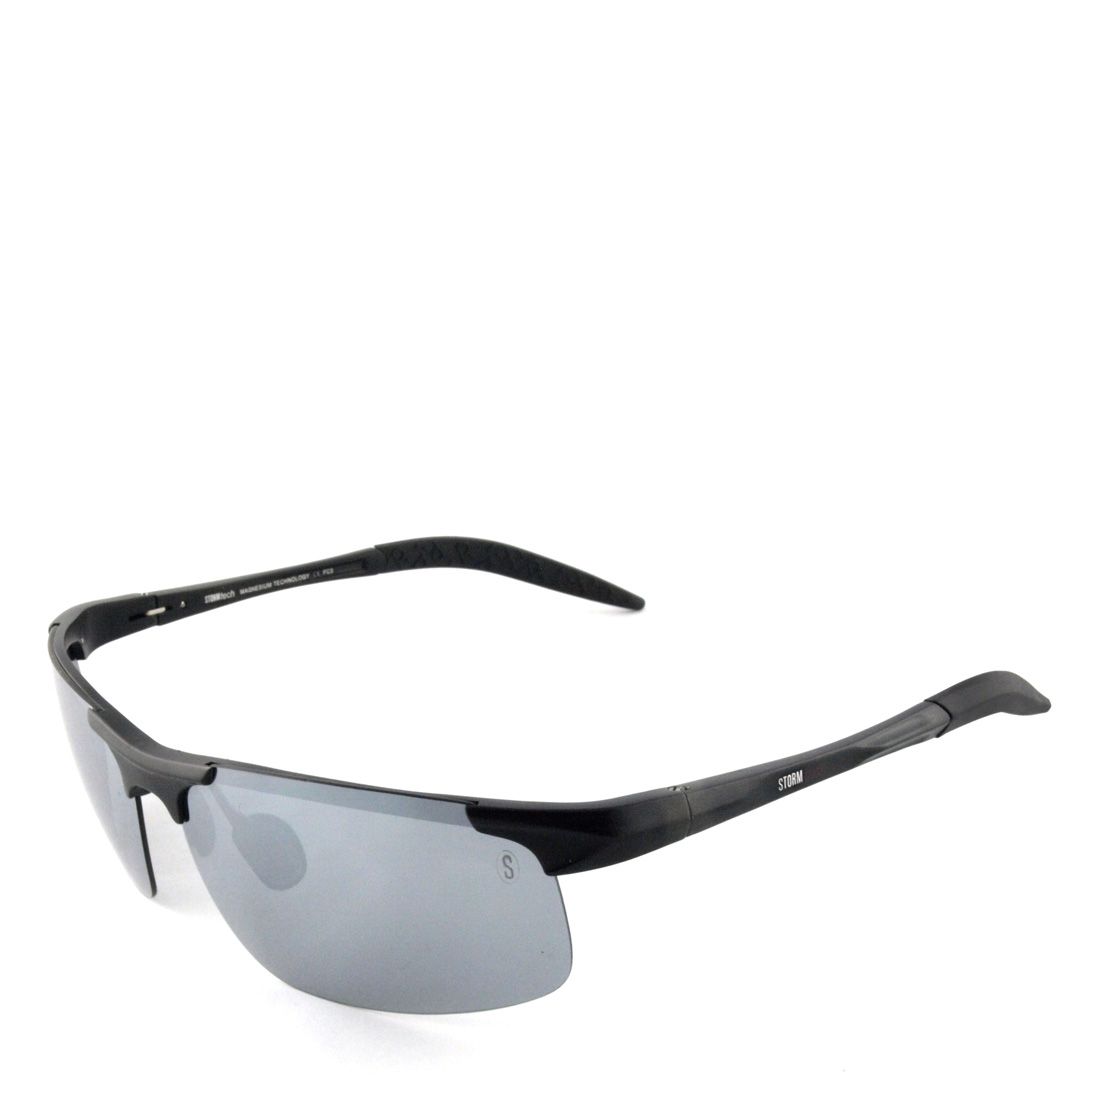 Viahda Brand Sport Polarized Sunglasses Men Fishing Sun Glasses